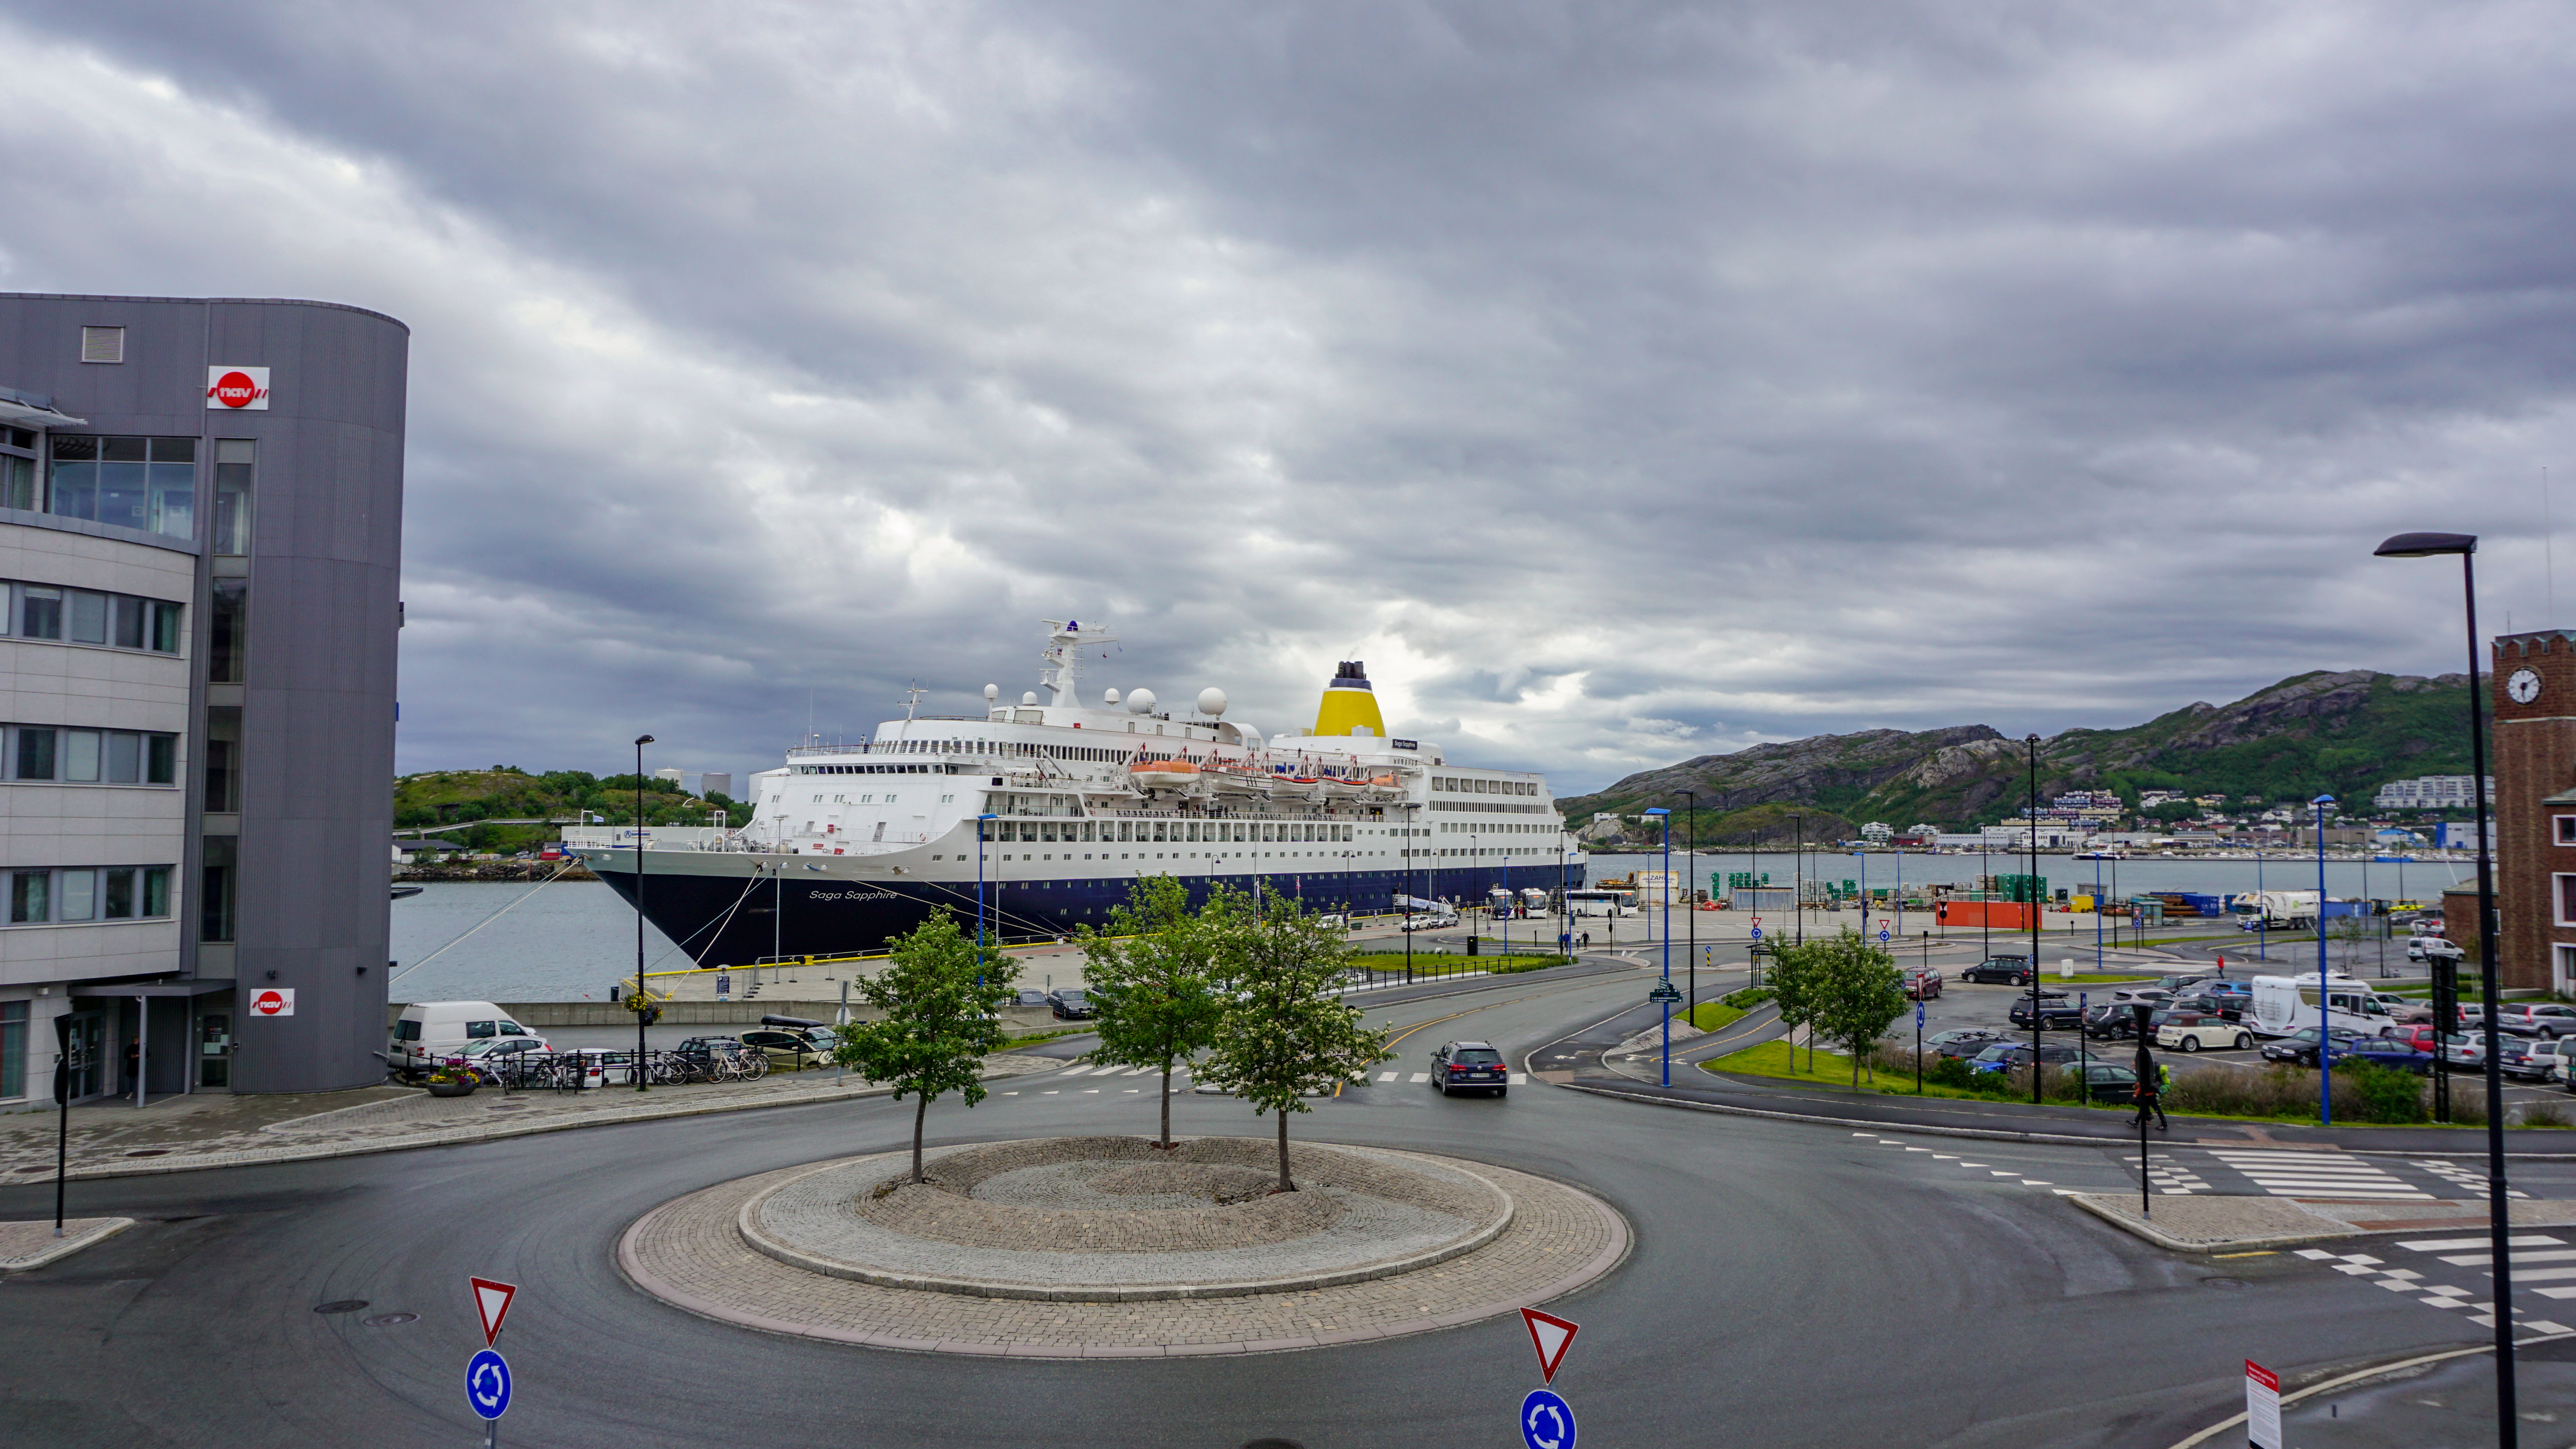 Bodø kommune